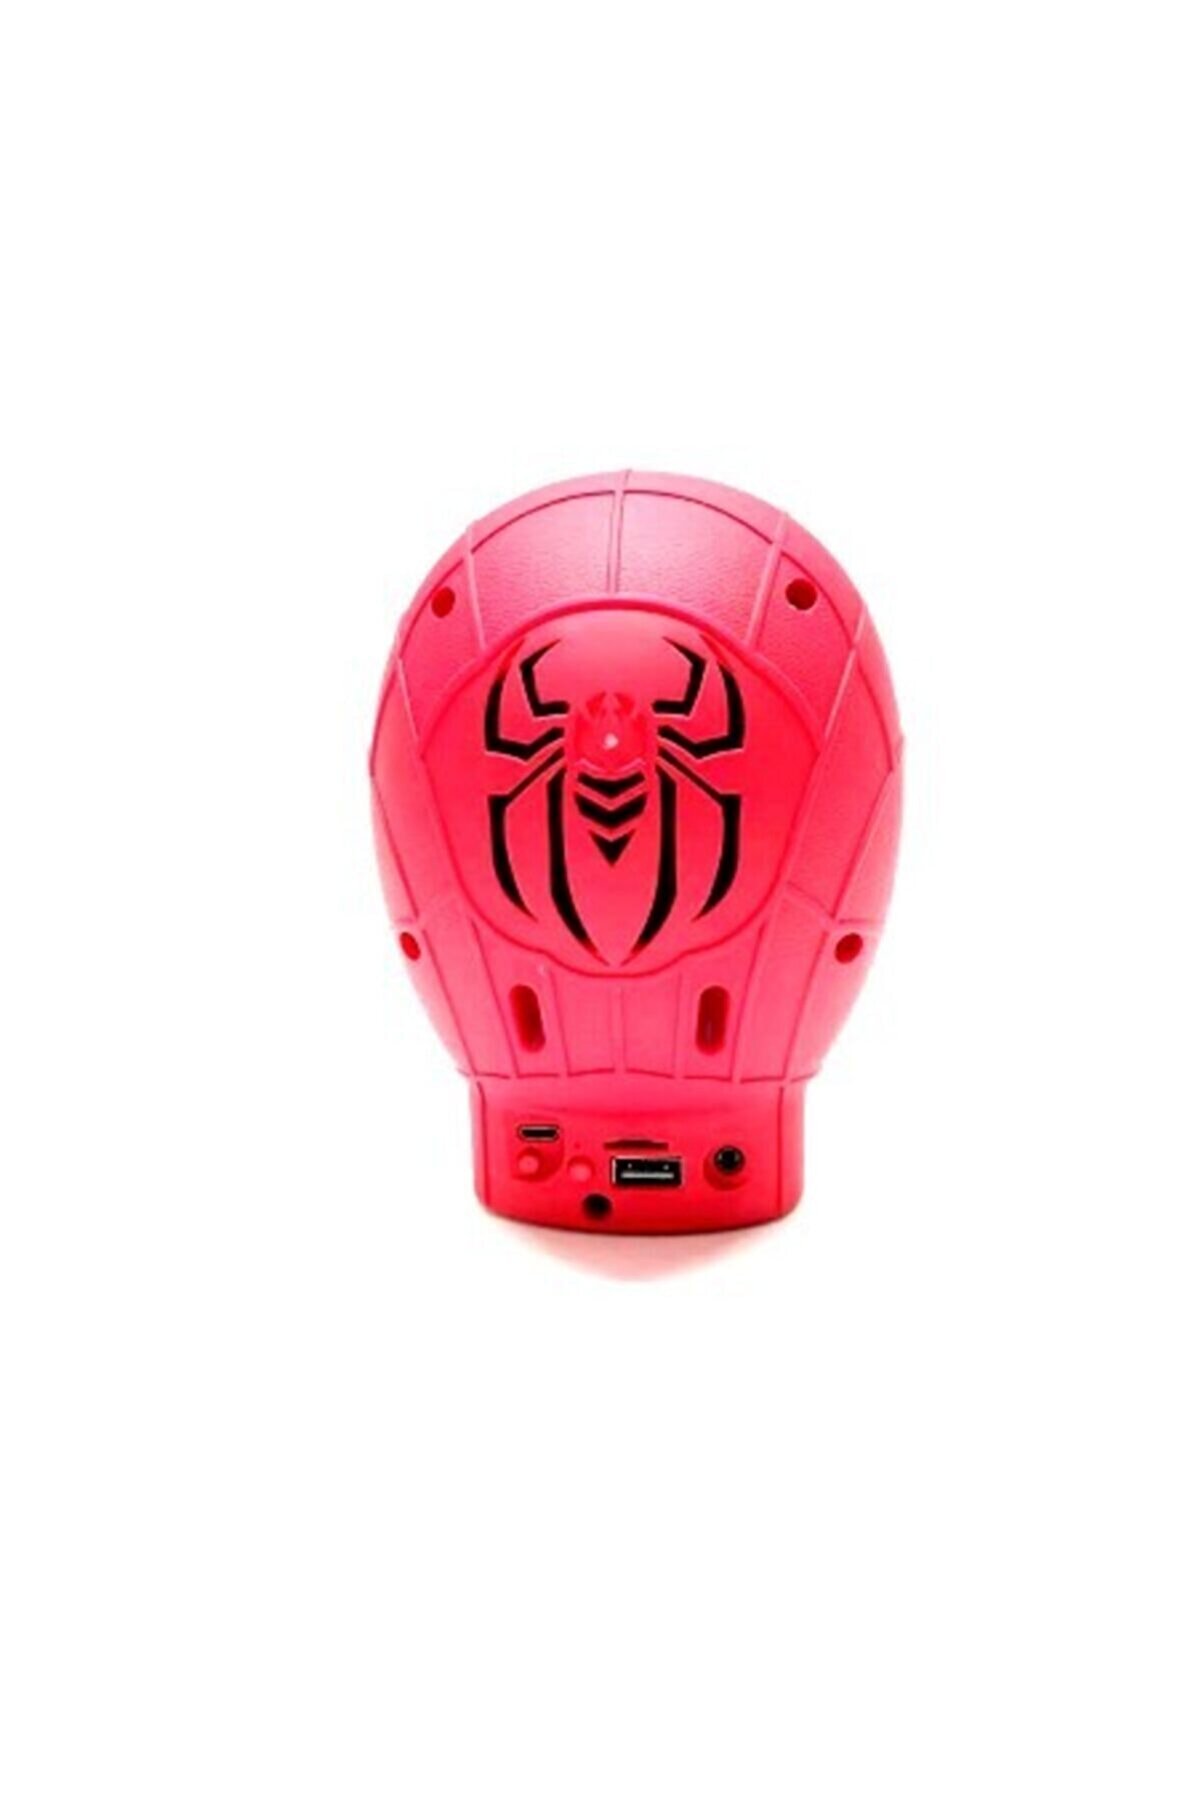 Örümcek Adam Tasarım Spider Man Bluetooth Speaker Hoparlör + Hediye_5